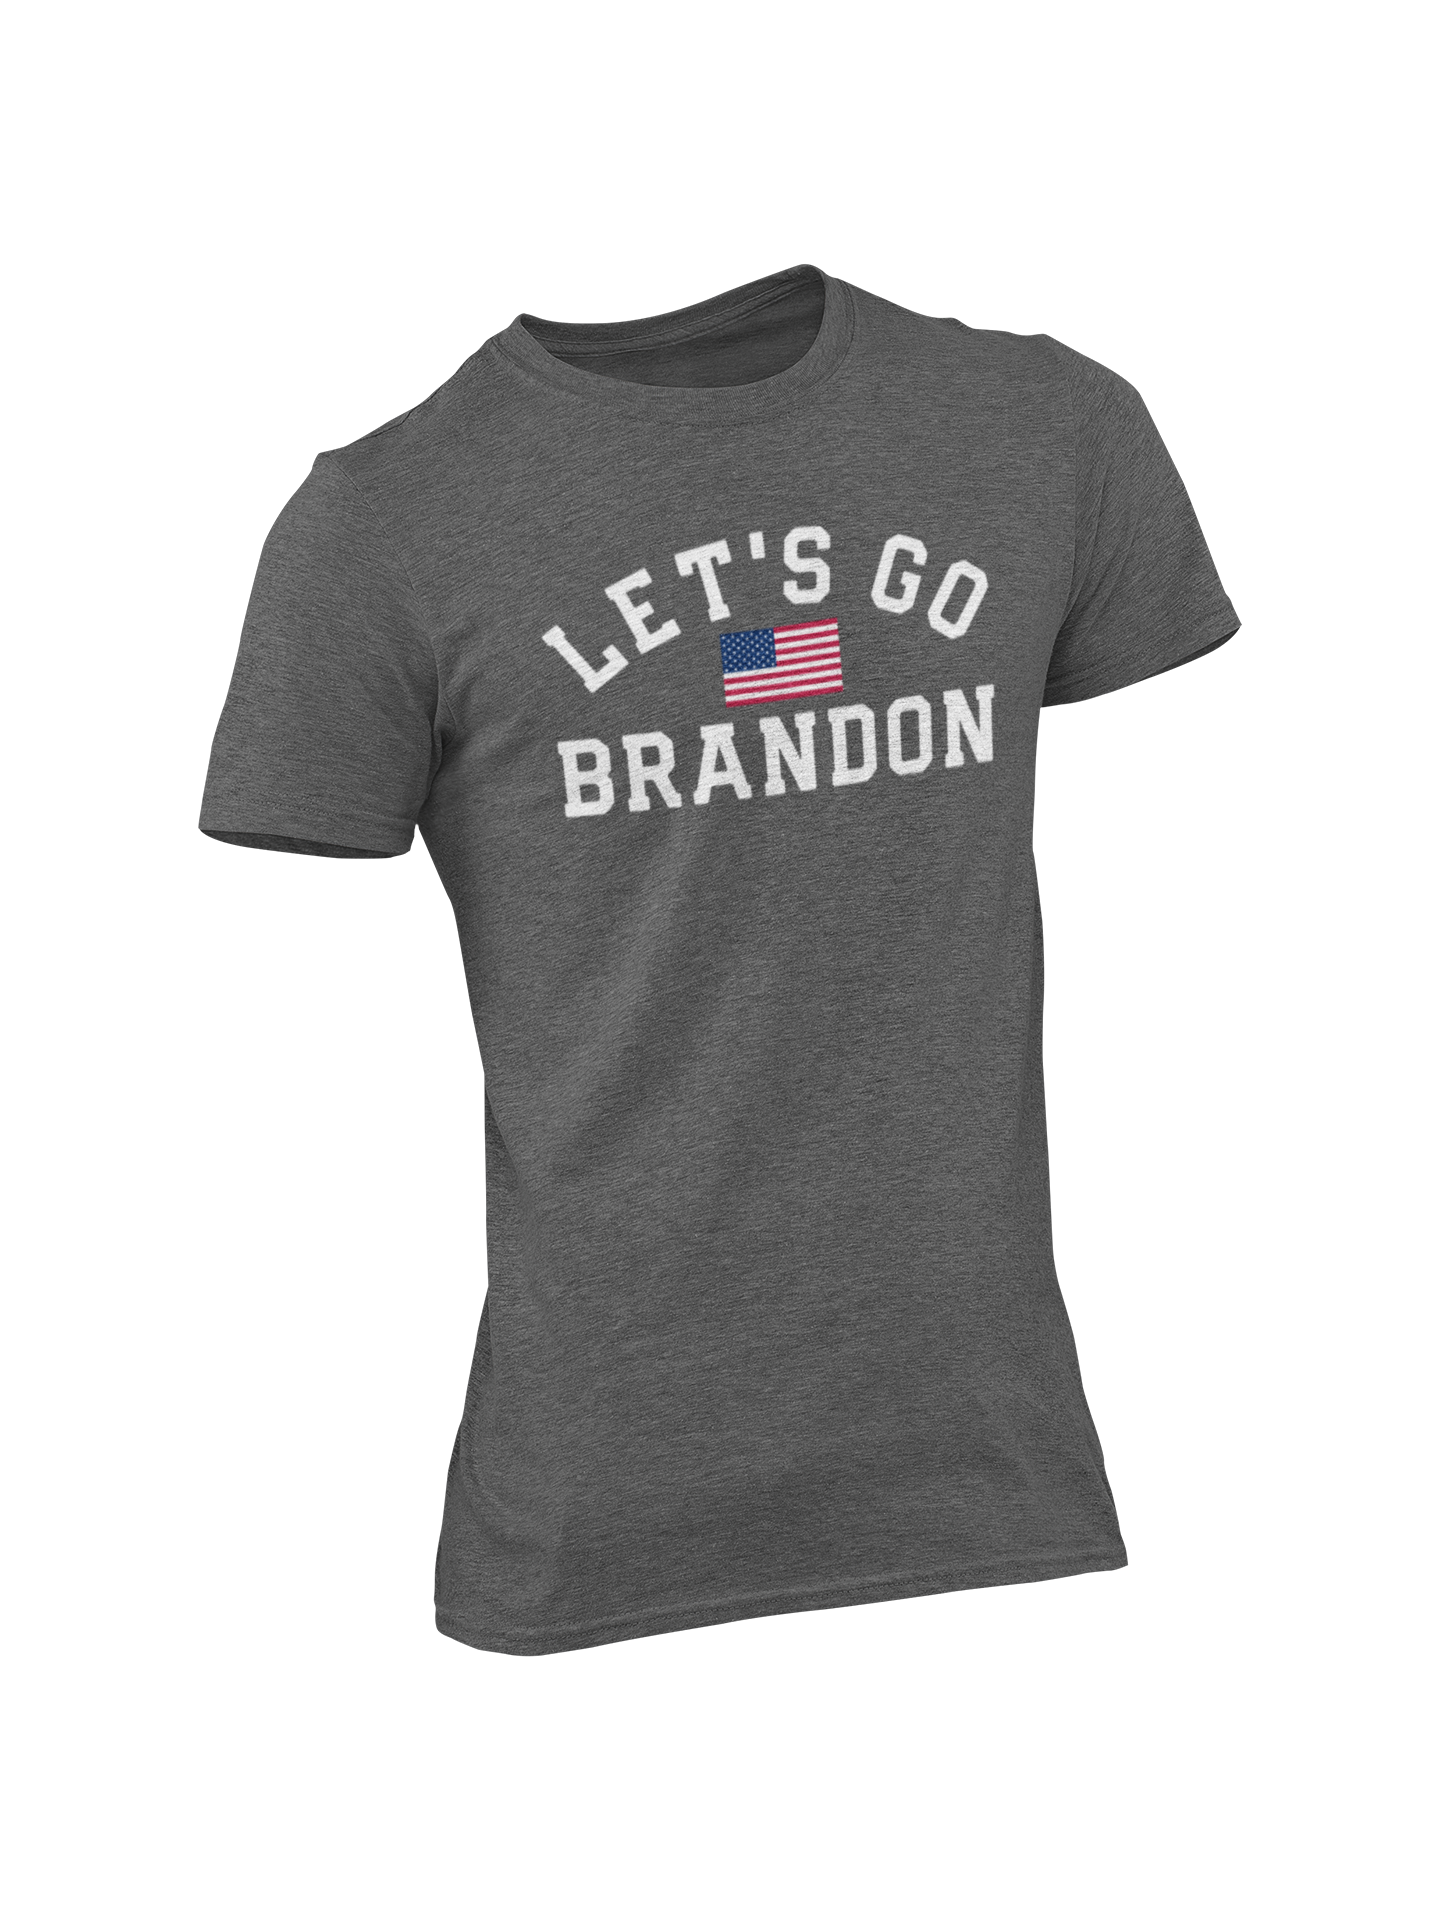 Let's Go Brandon T-Shirt